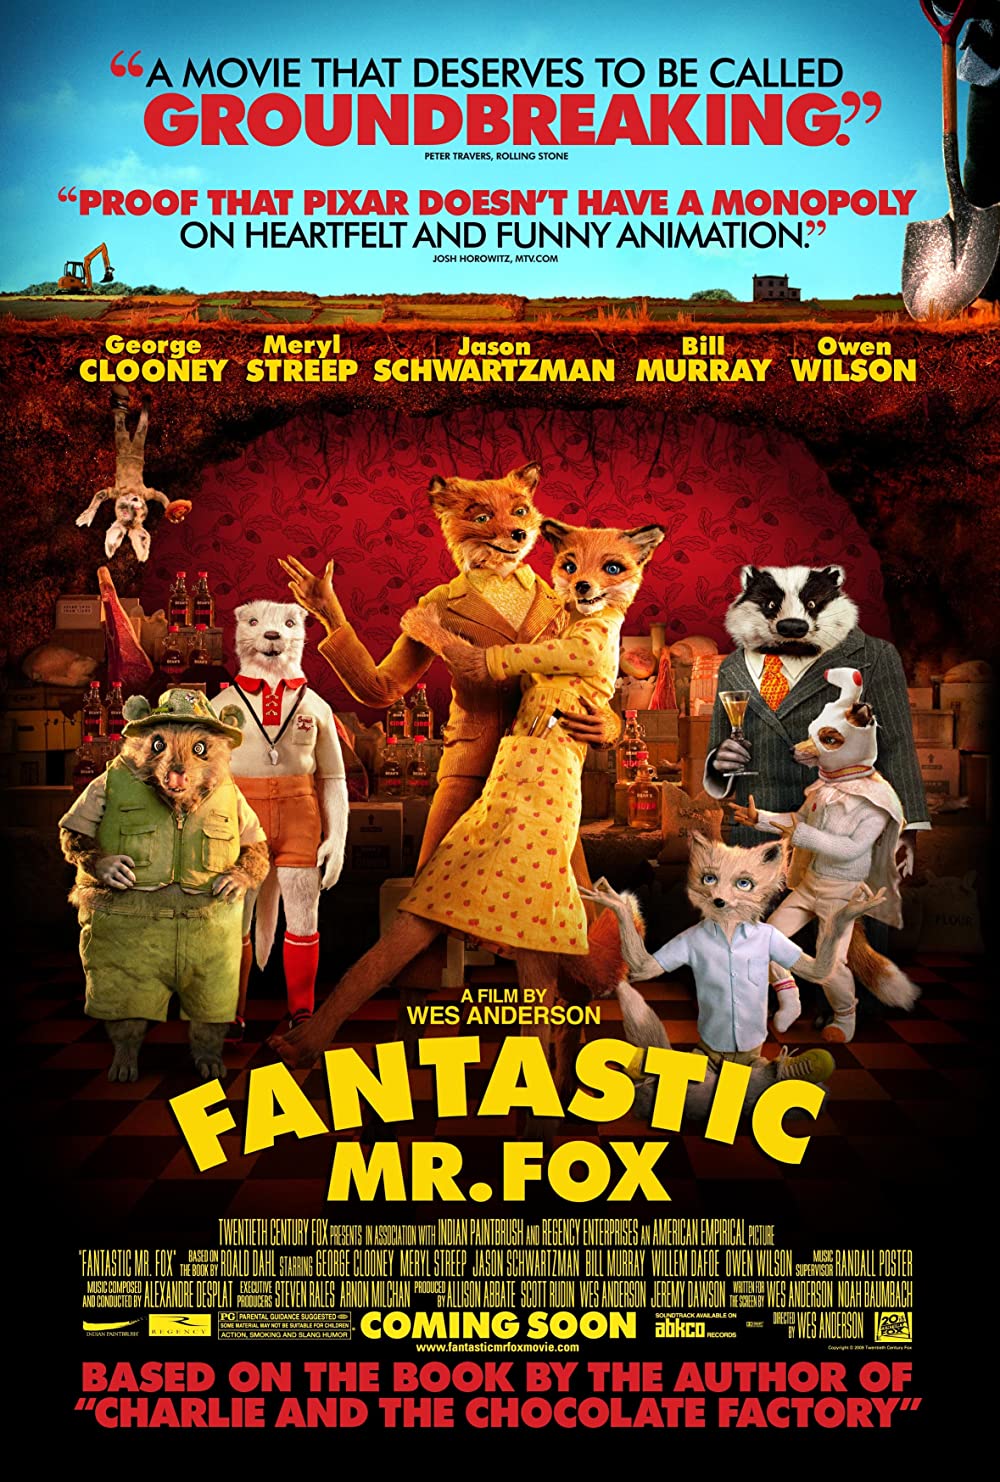 Filmbeschreibung zu Fantastic Mr. Fox